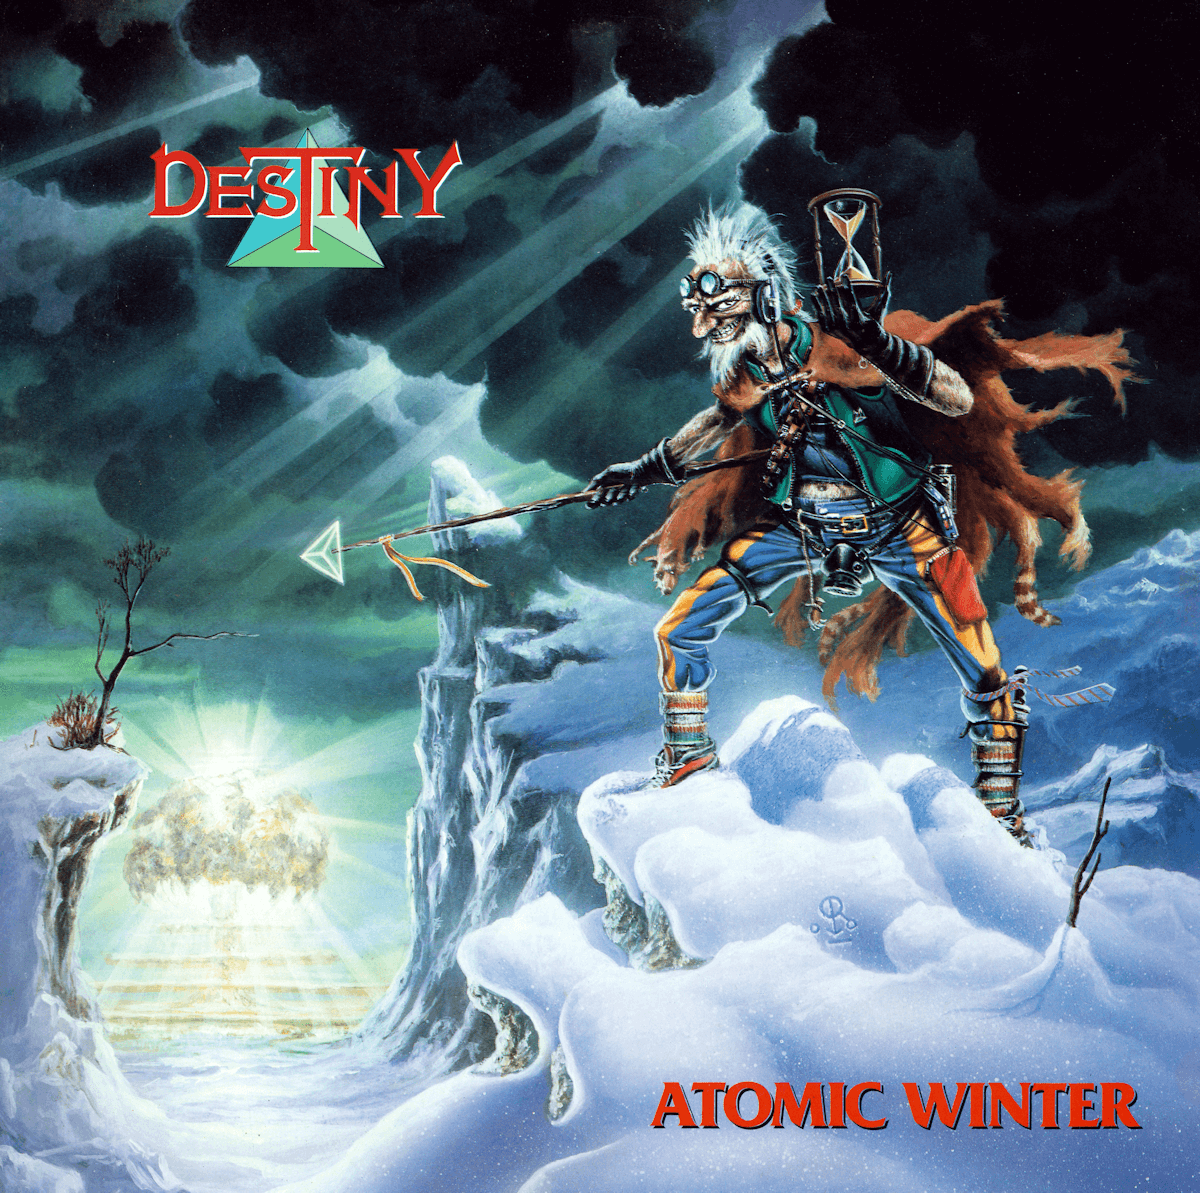 DESTINY / Atomic winter - 1988 